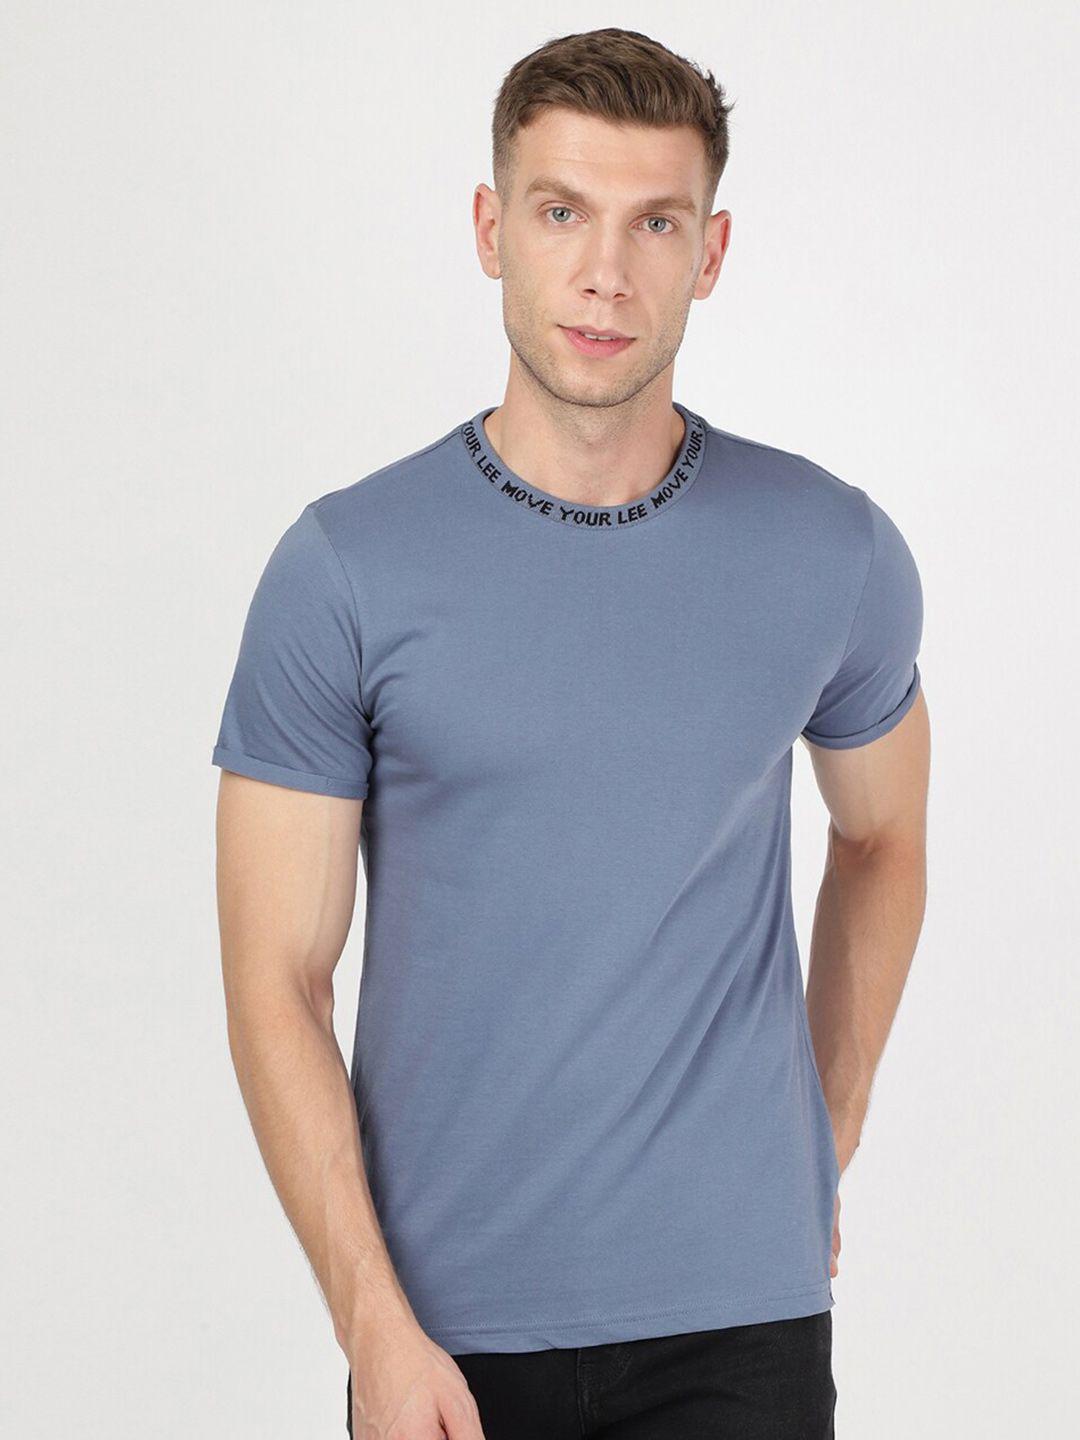 lee men blue slim fit t-shirt